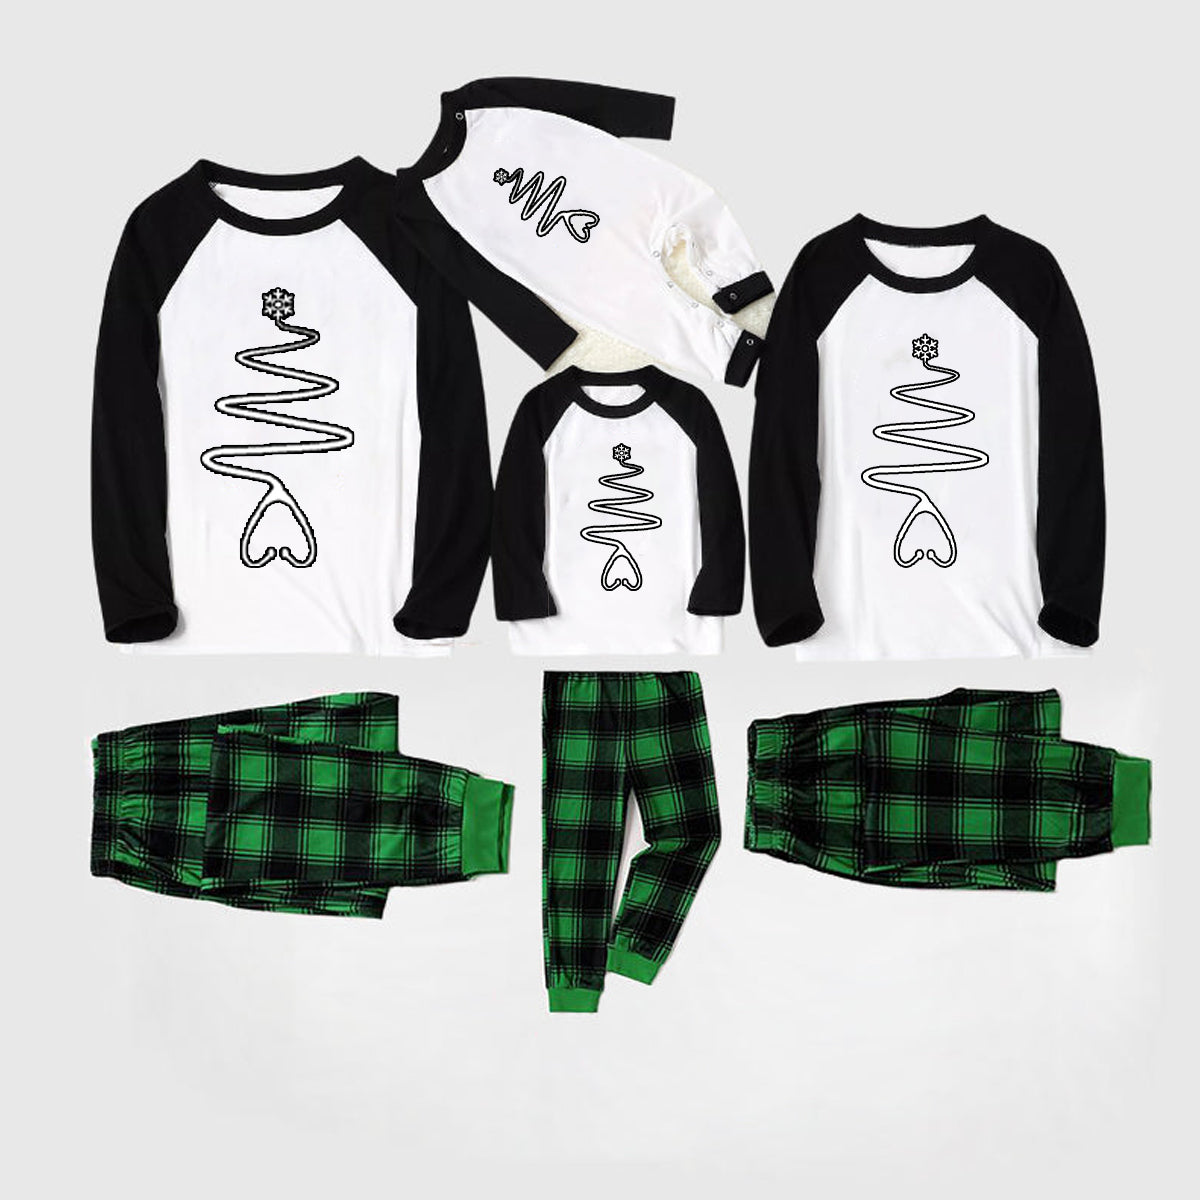 Christmas Cute Cartoon Christmas tree prints and stethoscope prints Casual Long Sleeve Sweatshirts Black Contrast Top and Black and Gren Plaid Pants Family Matching Pajamas Sets